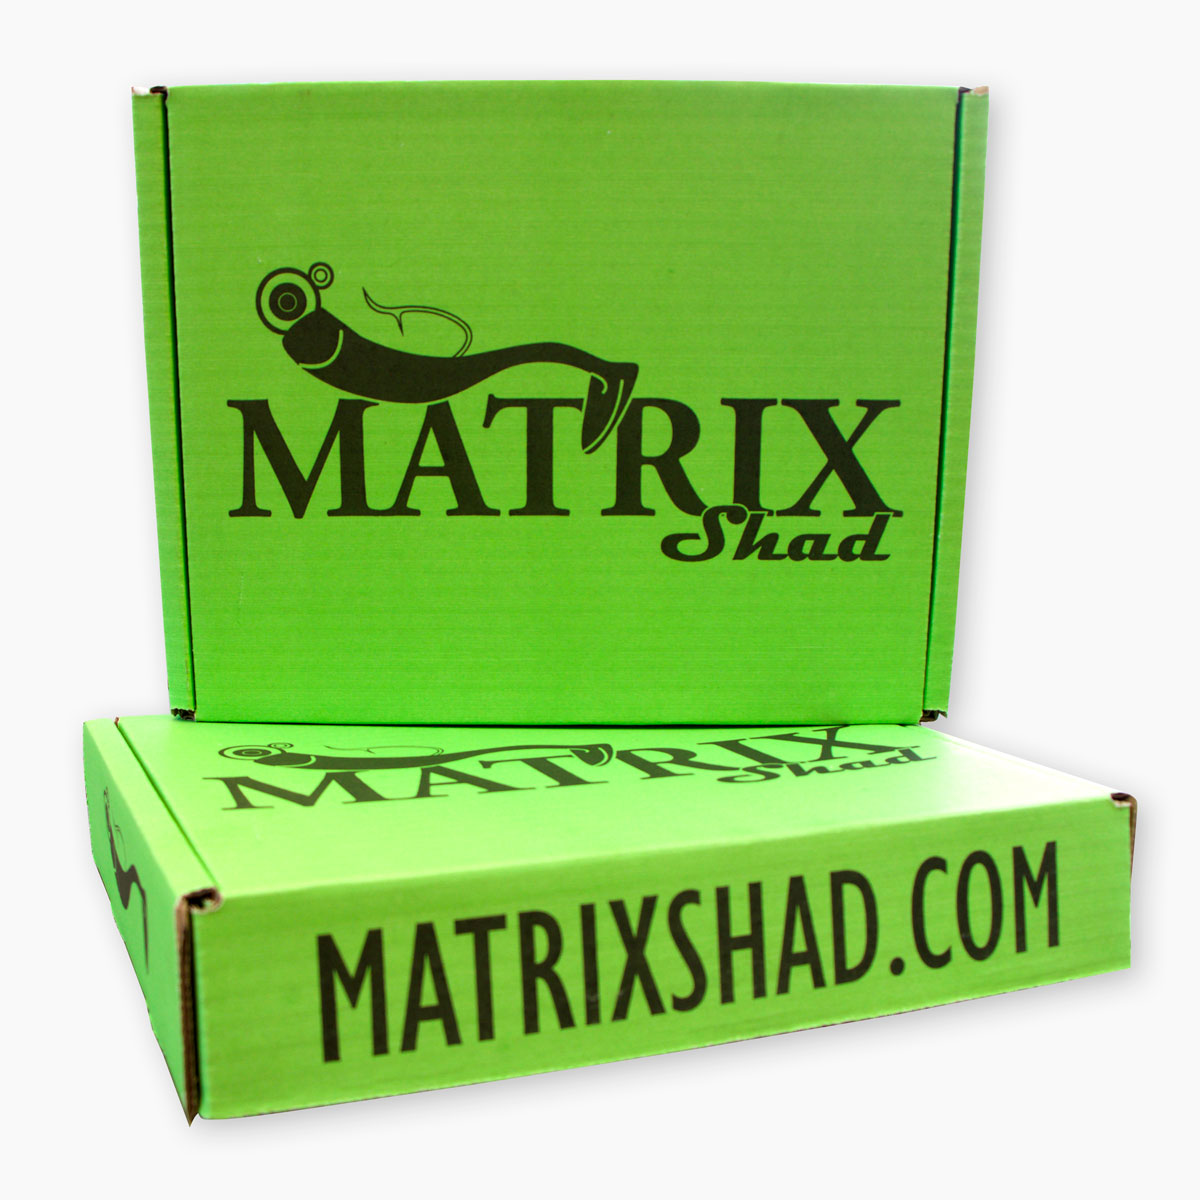 MATRIX™ Bait Box - Matrix Shad